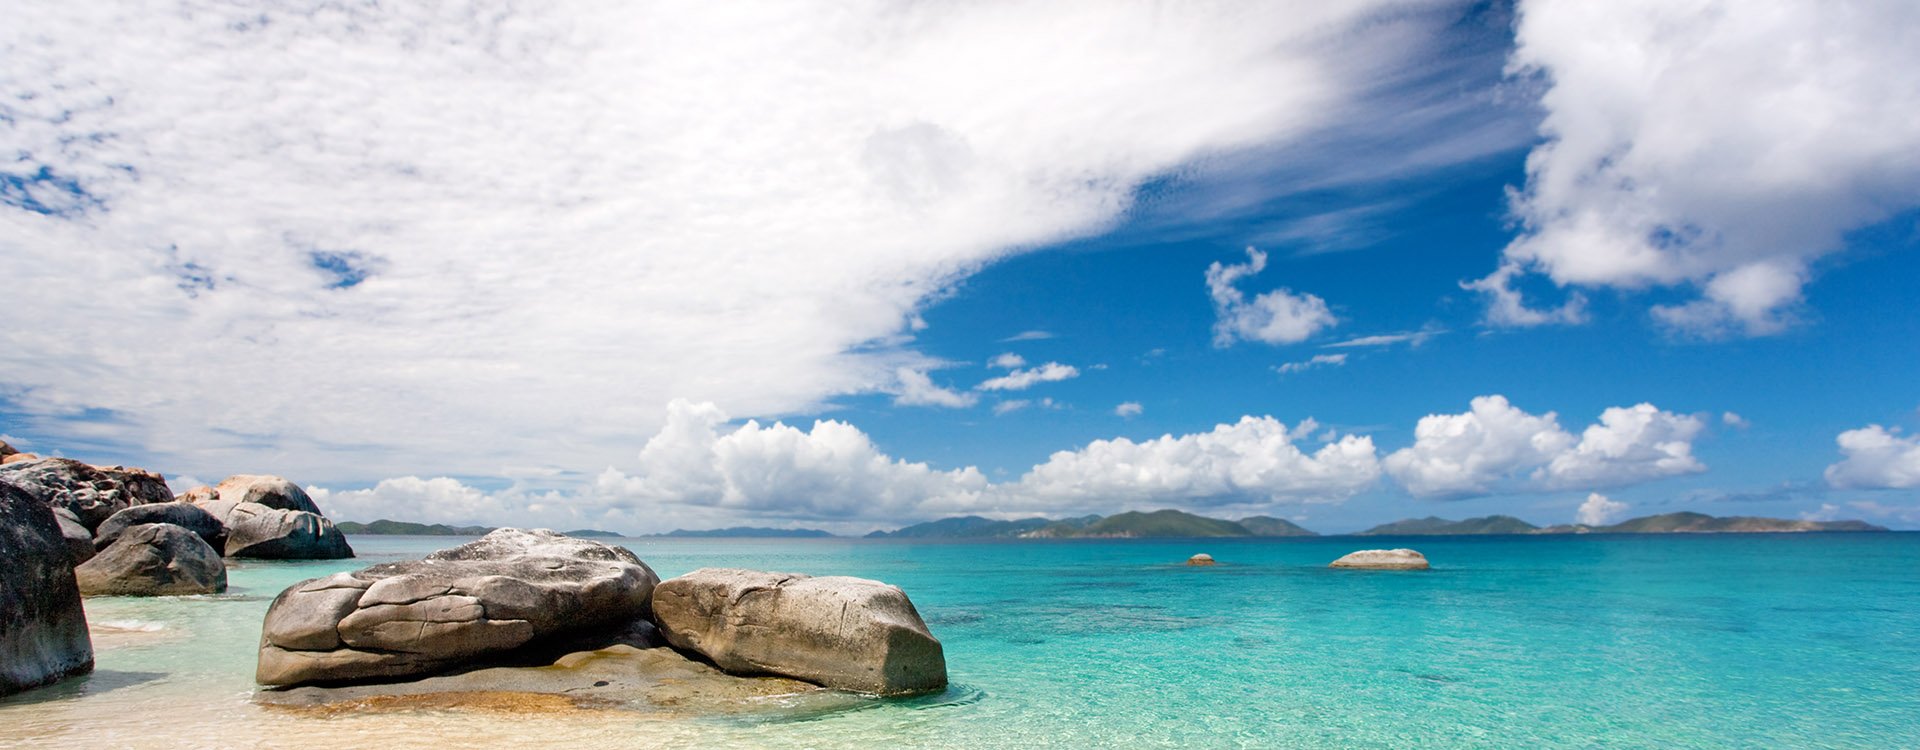 beautiful tropical rocky beach in caribbean waters